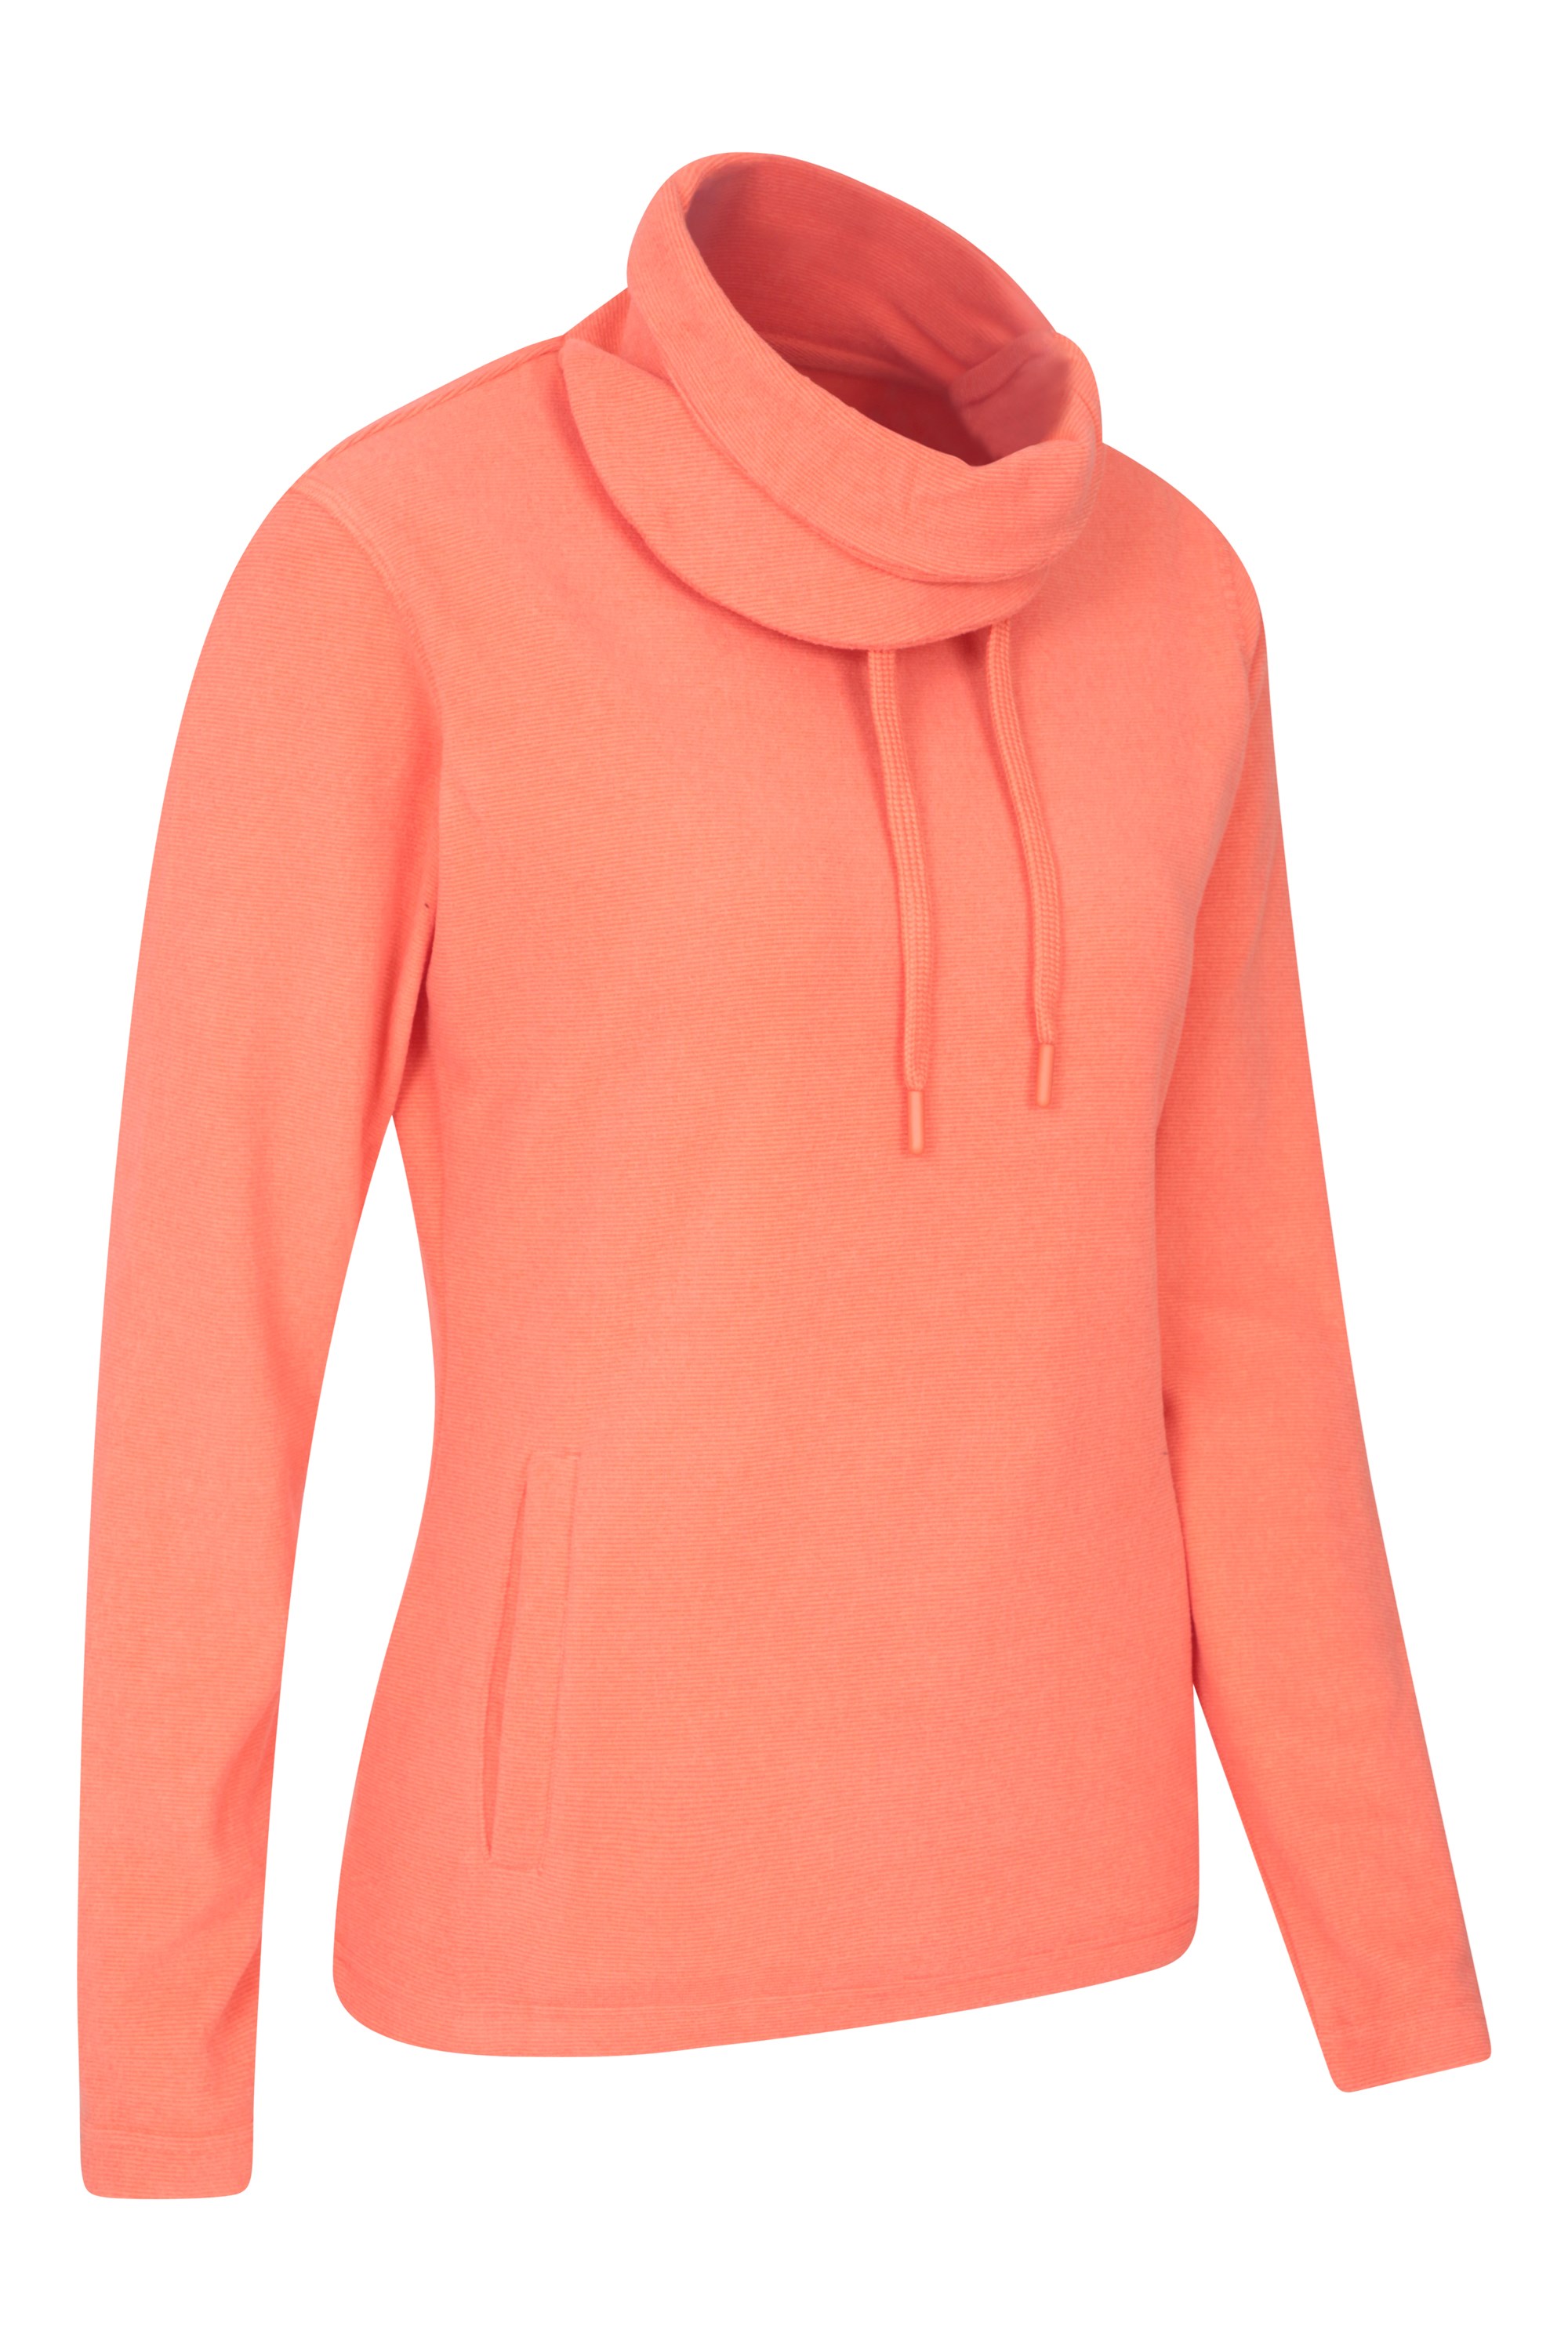 Kuhl Sweatshirt Womens Large Orange Funnel Cowl Neck Pocket Sweater Fall  108846 